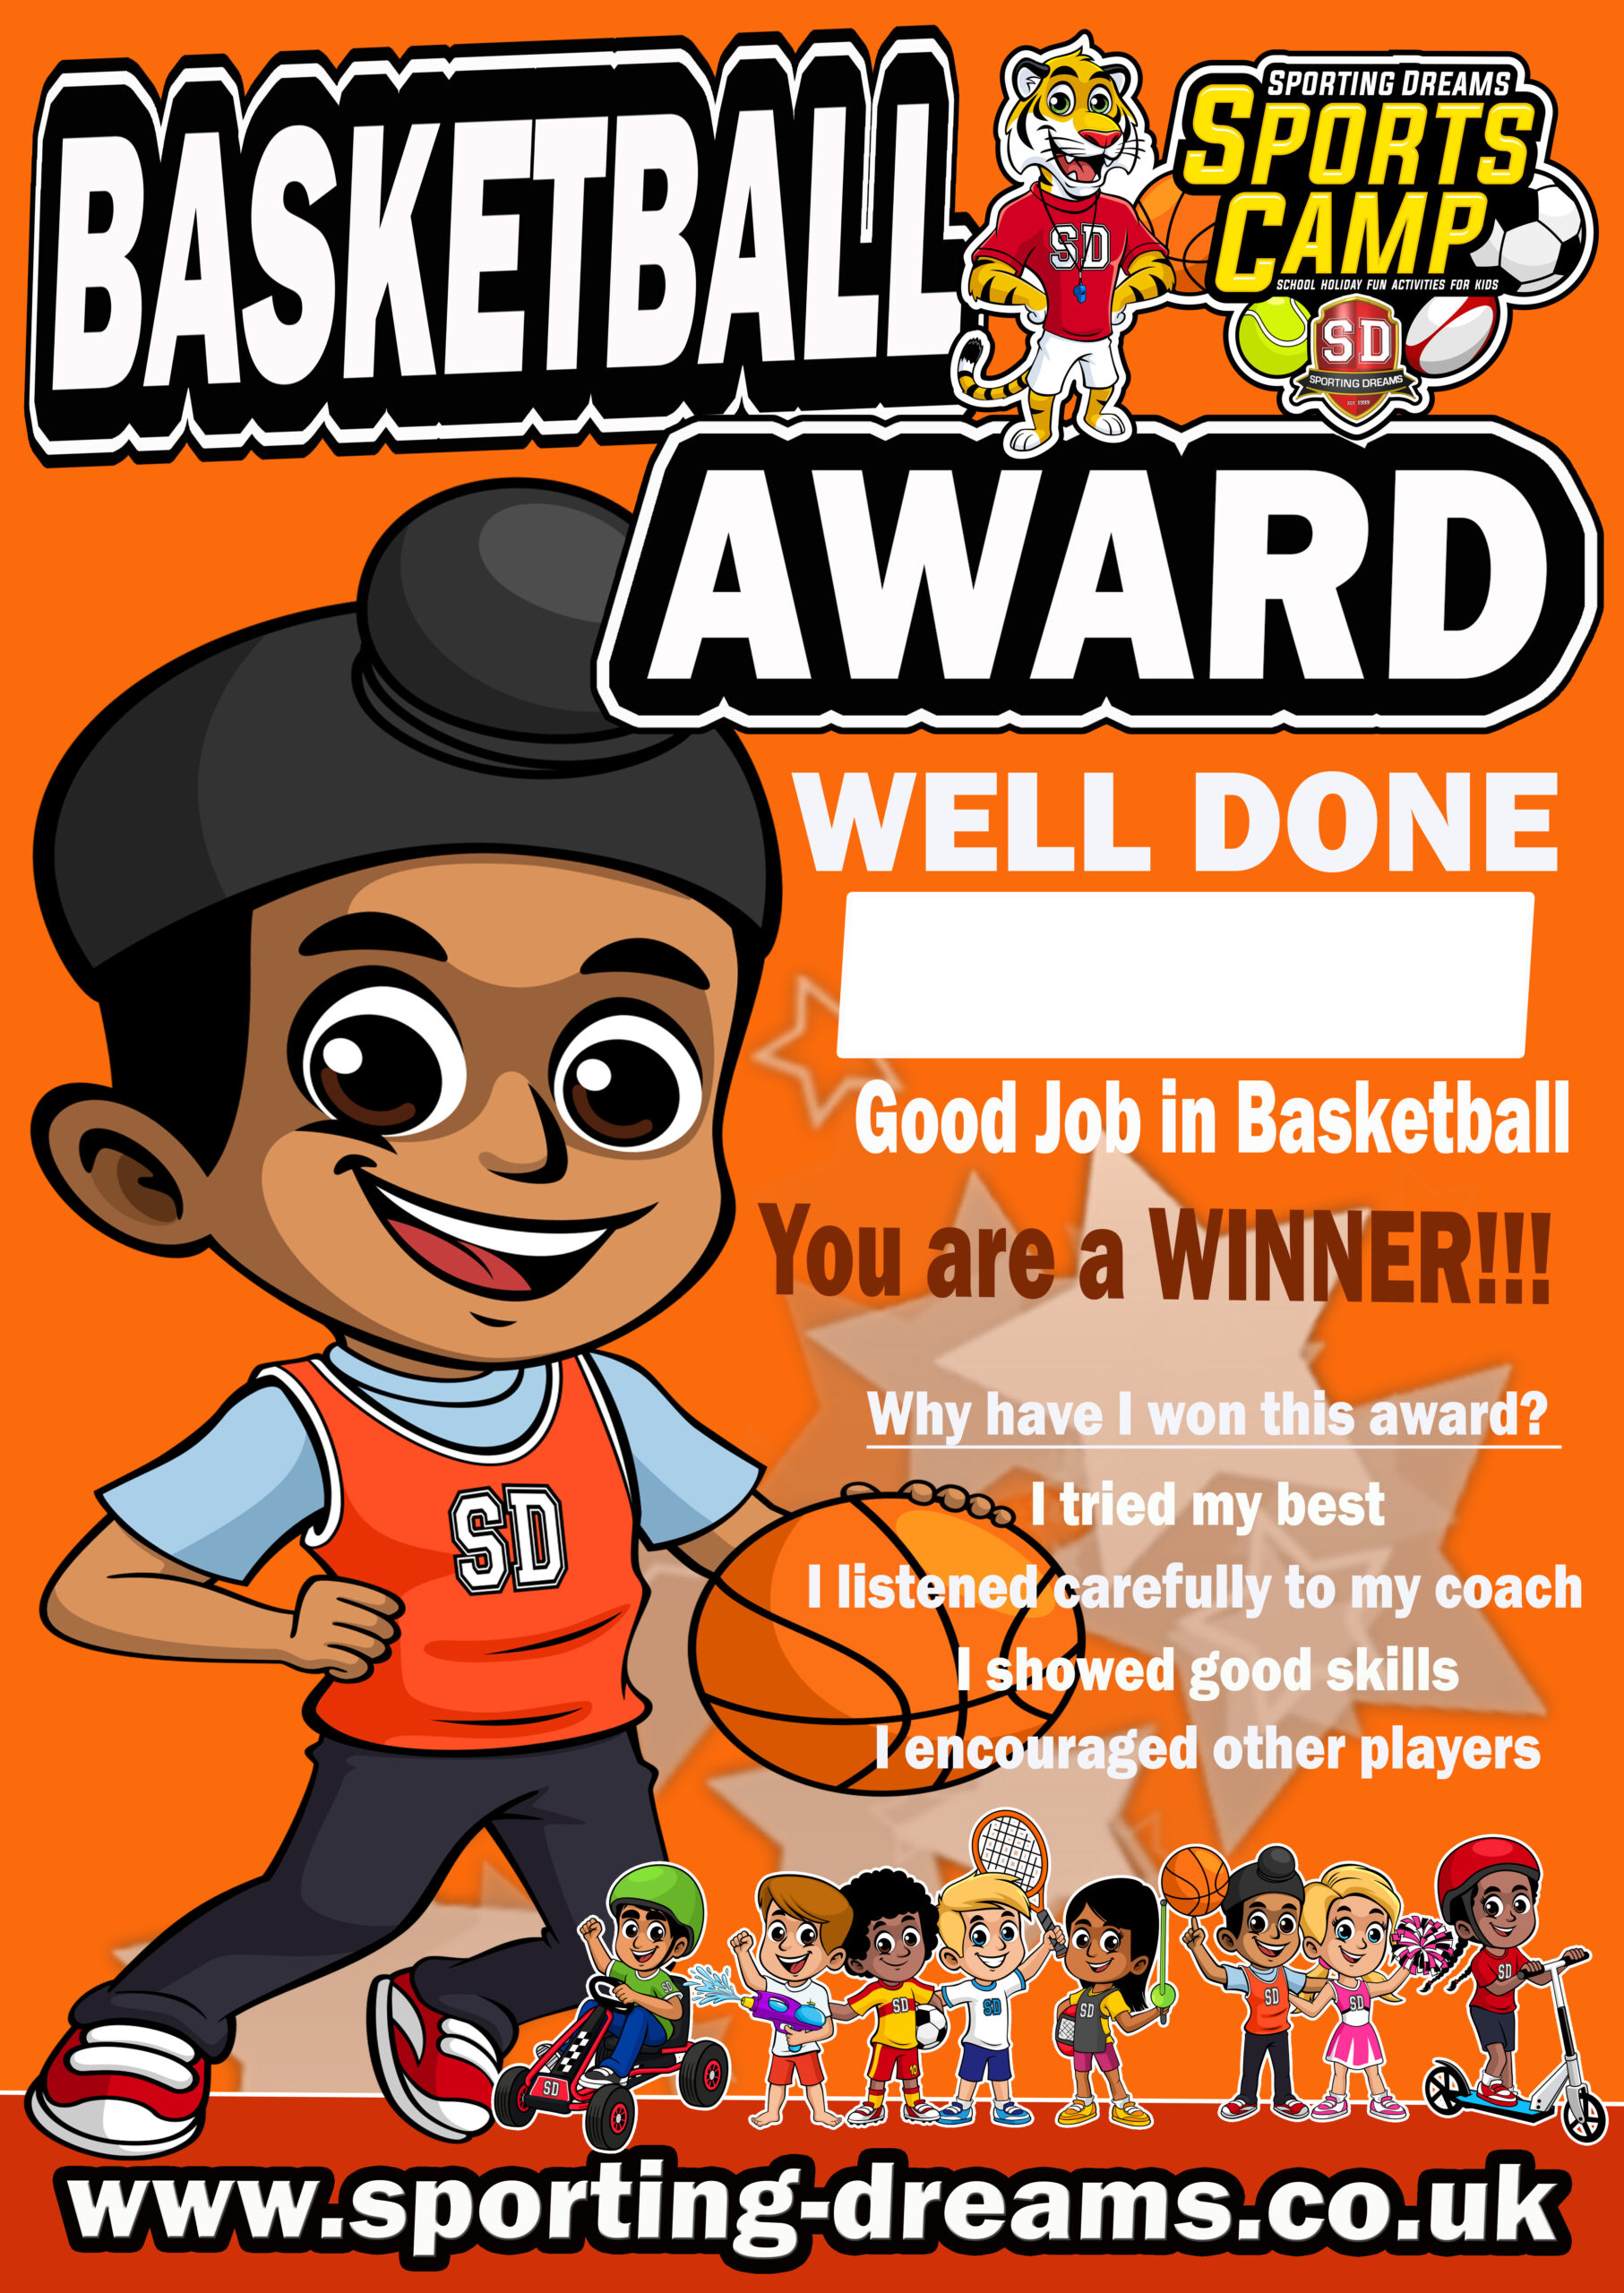 Sporting Dreams School Holiday Sports Camps. Basketball Award